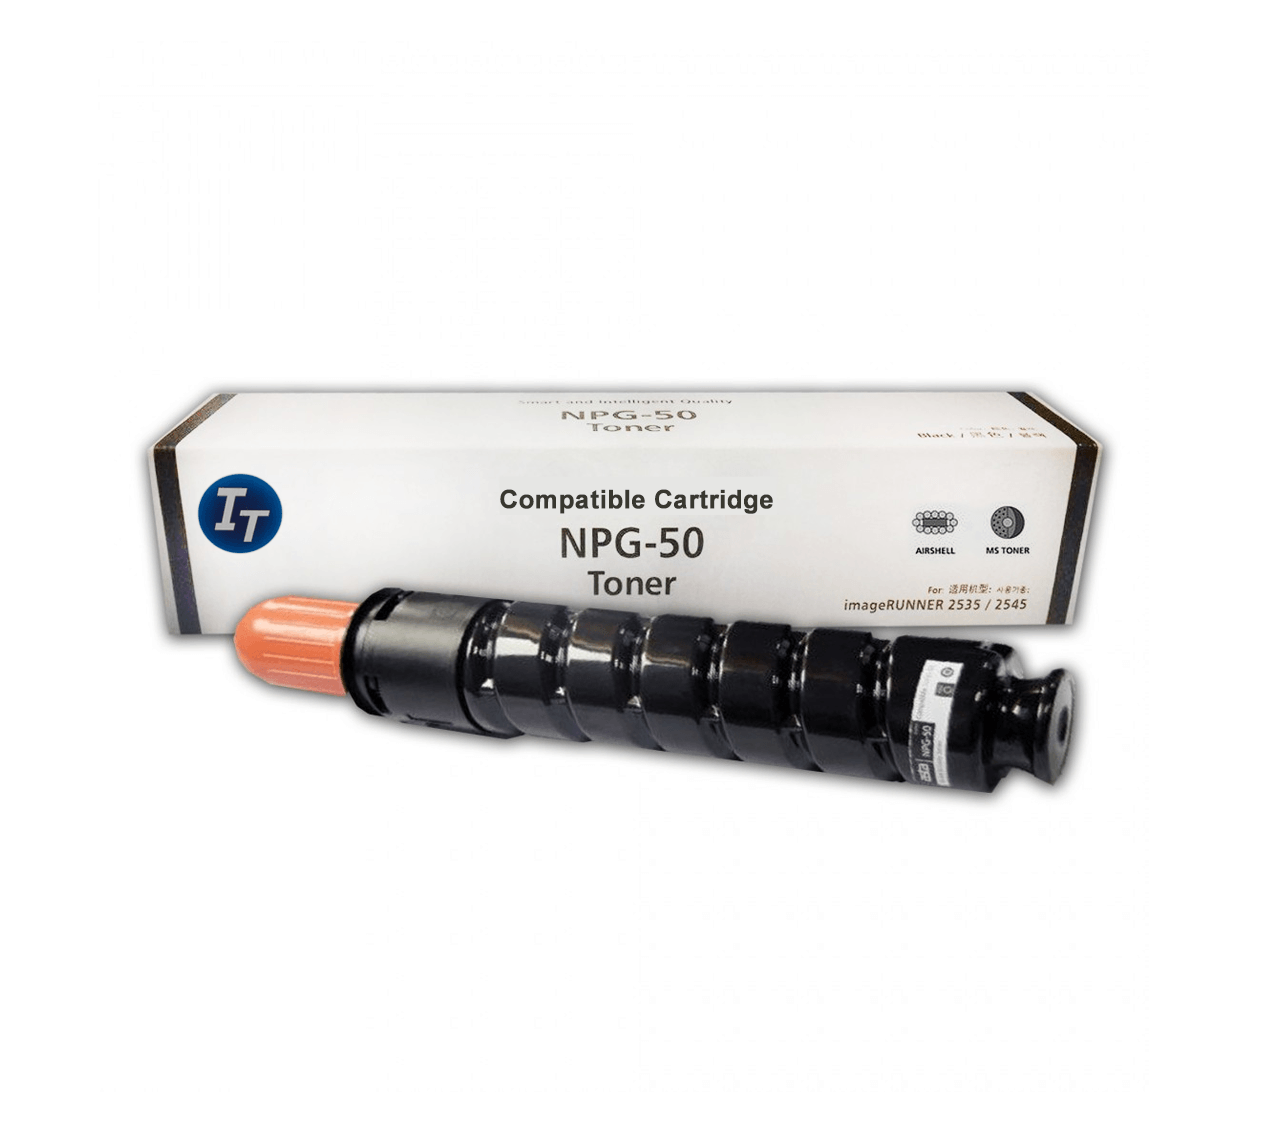 IT Toner Compatible Cartridge NPG-50 (3).png